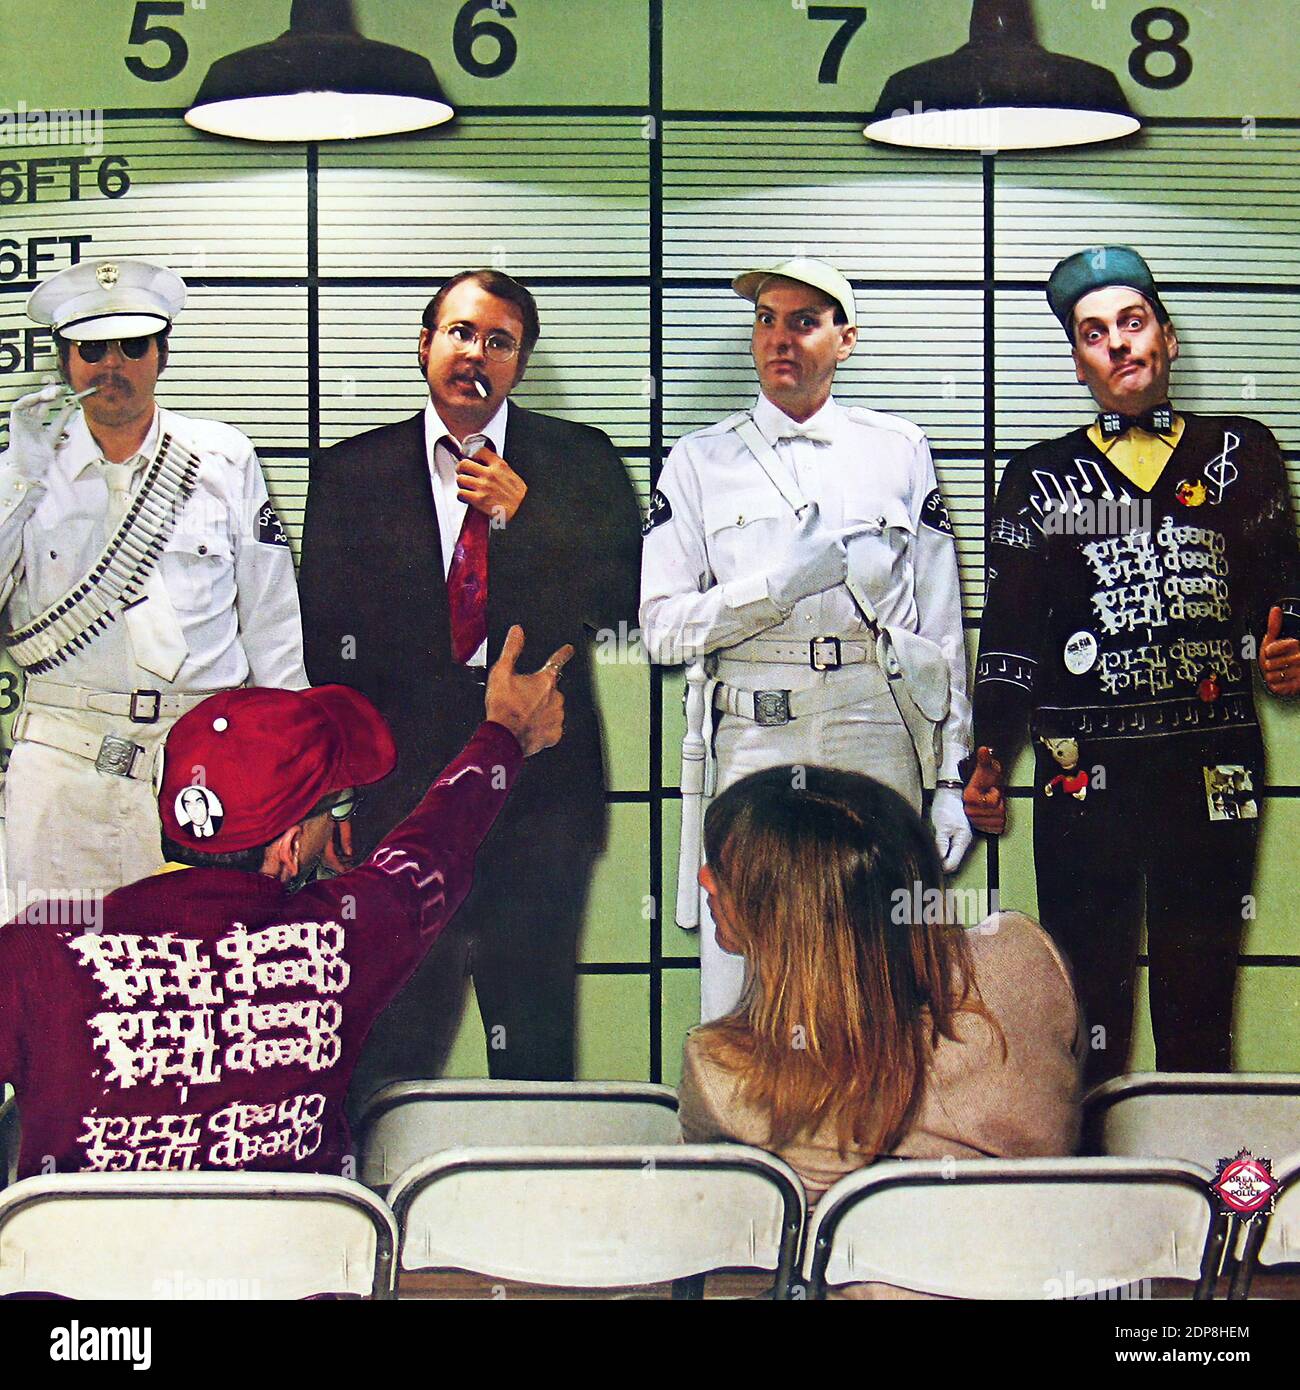 Cheap Trick Dream Police  - Vintage Vinyl Record Cover01 Stock Photo